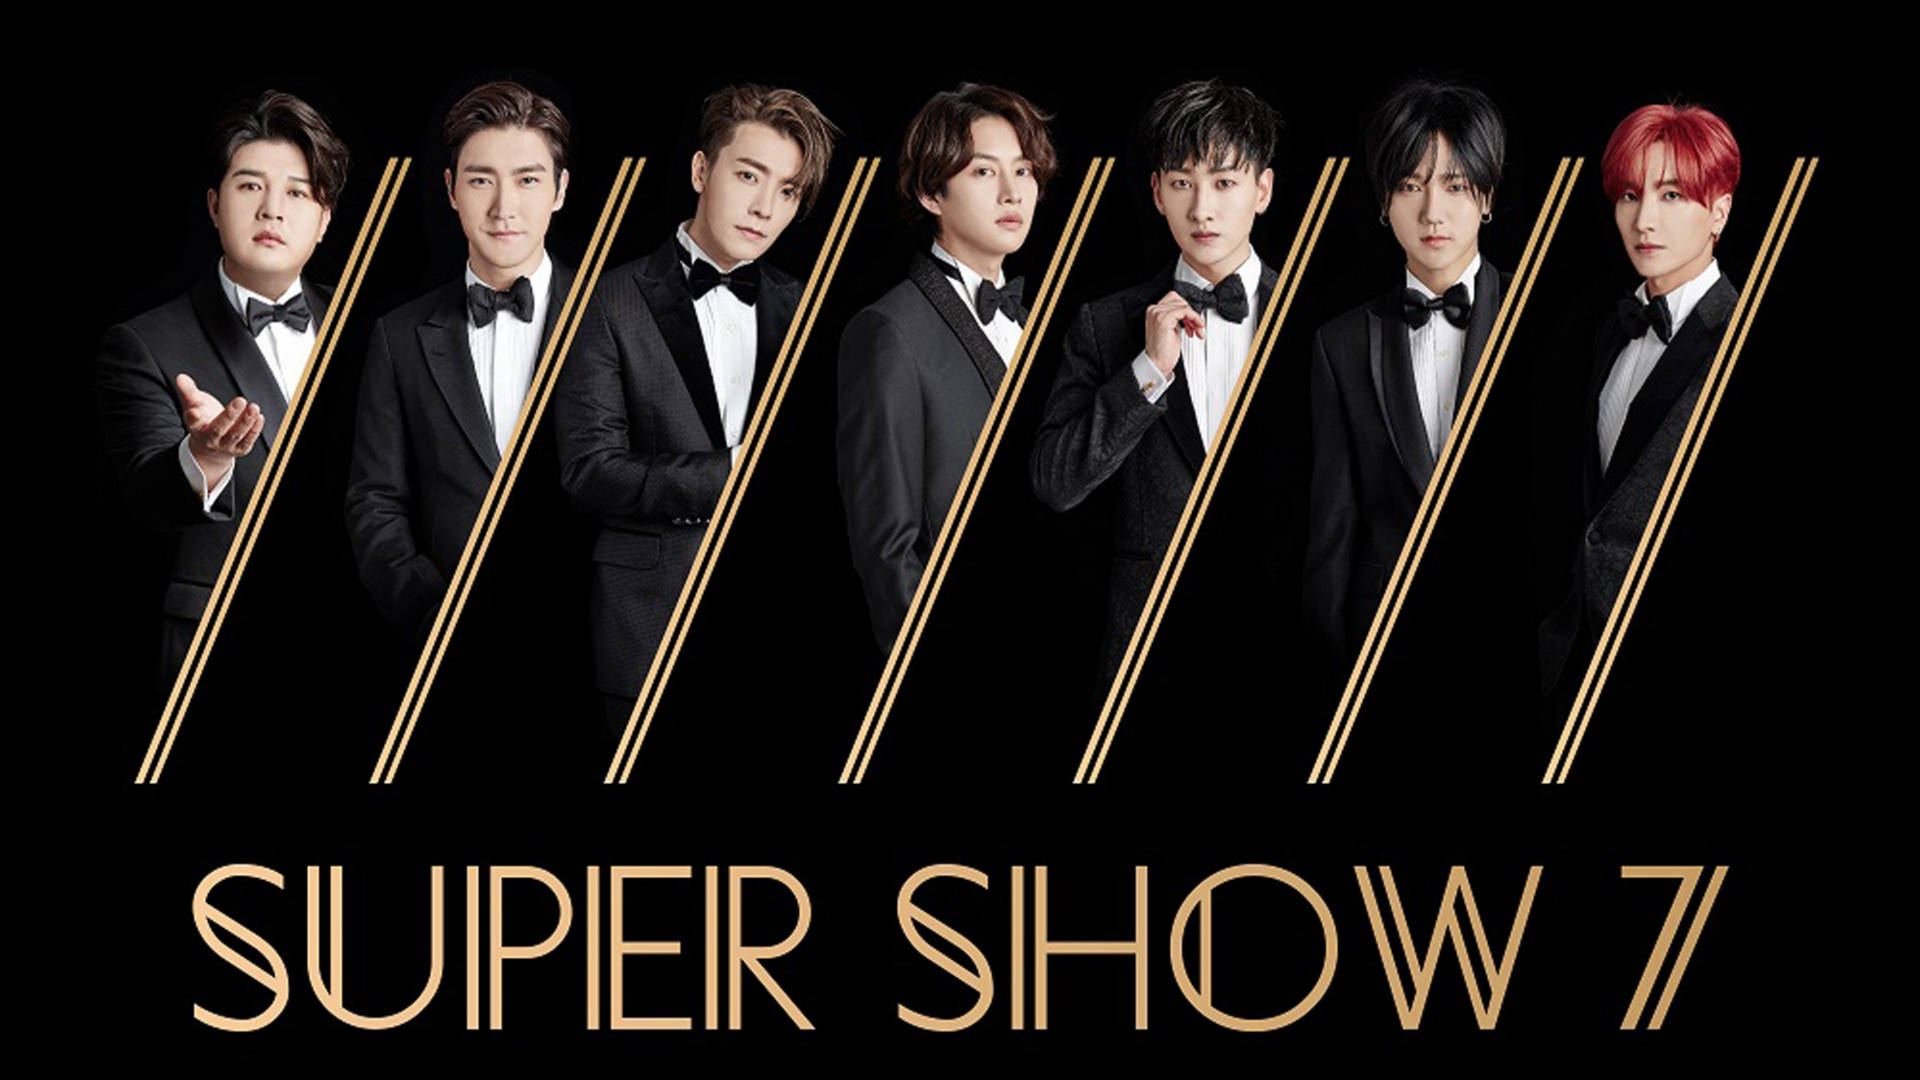 Super Junior Supershow 7 Wallpaper